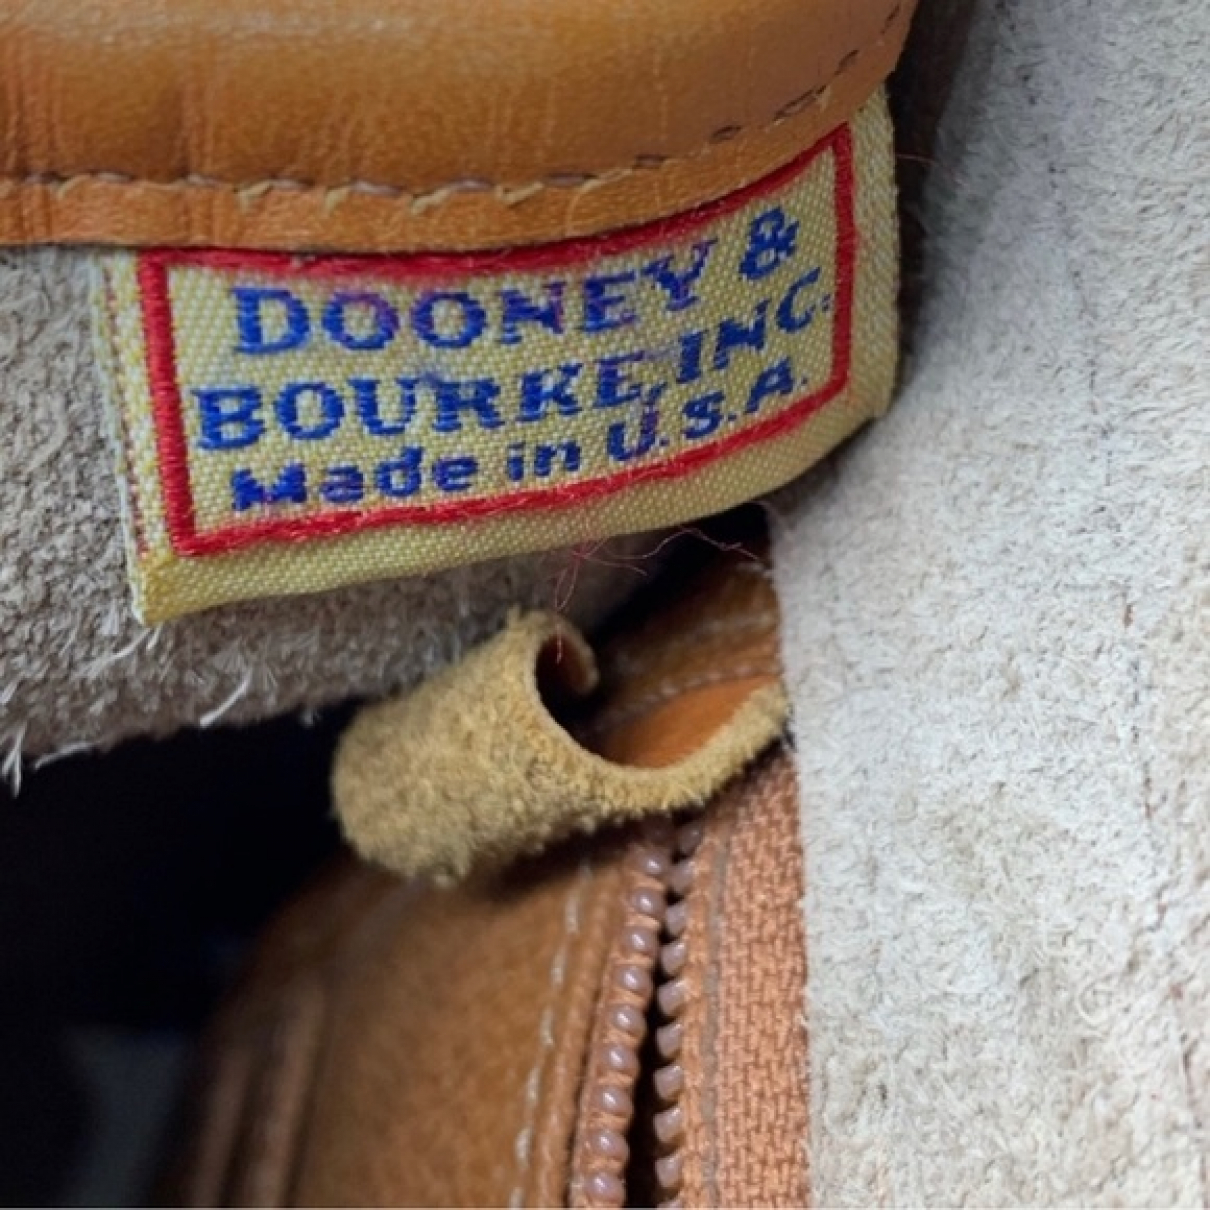 Dooney and bourke serial number